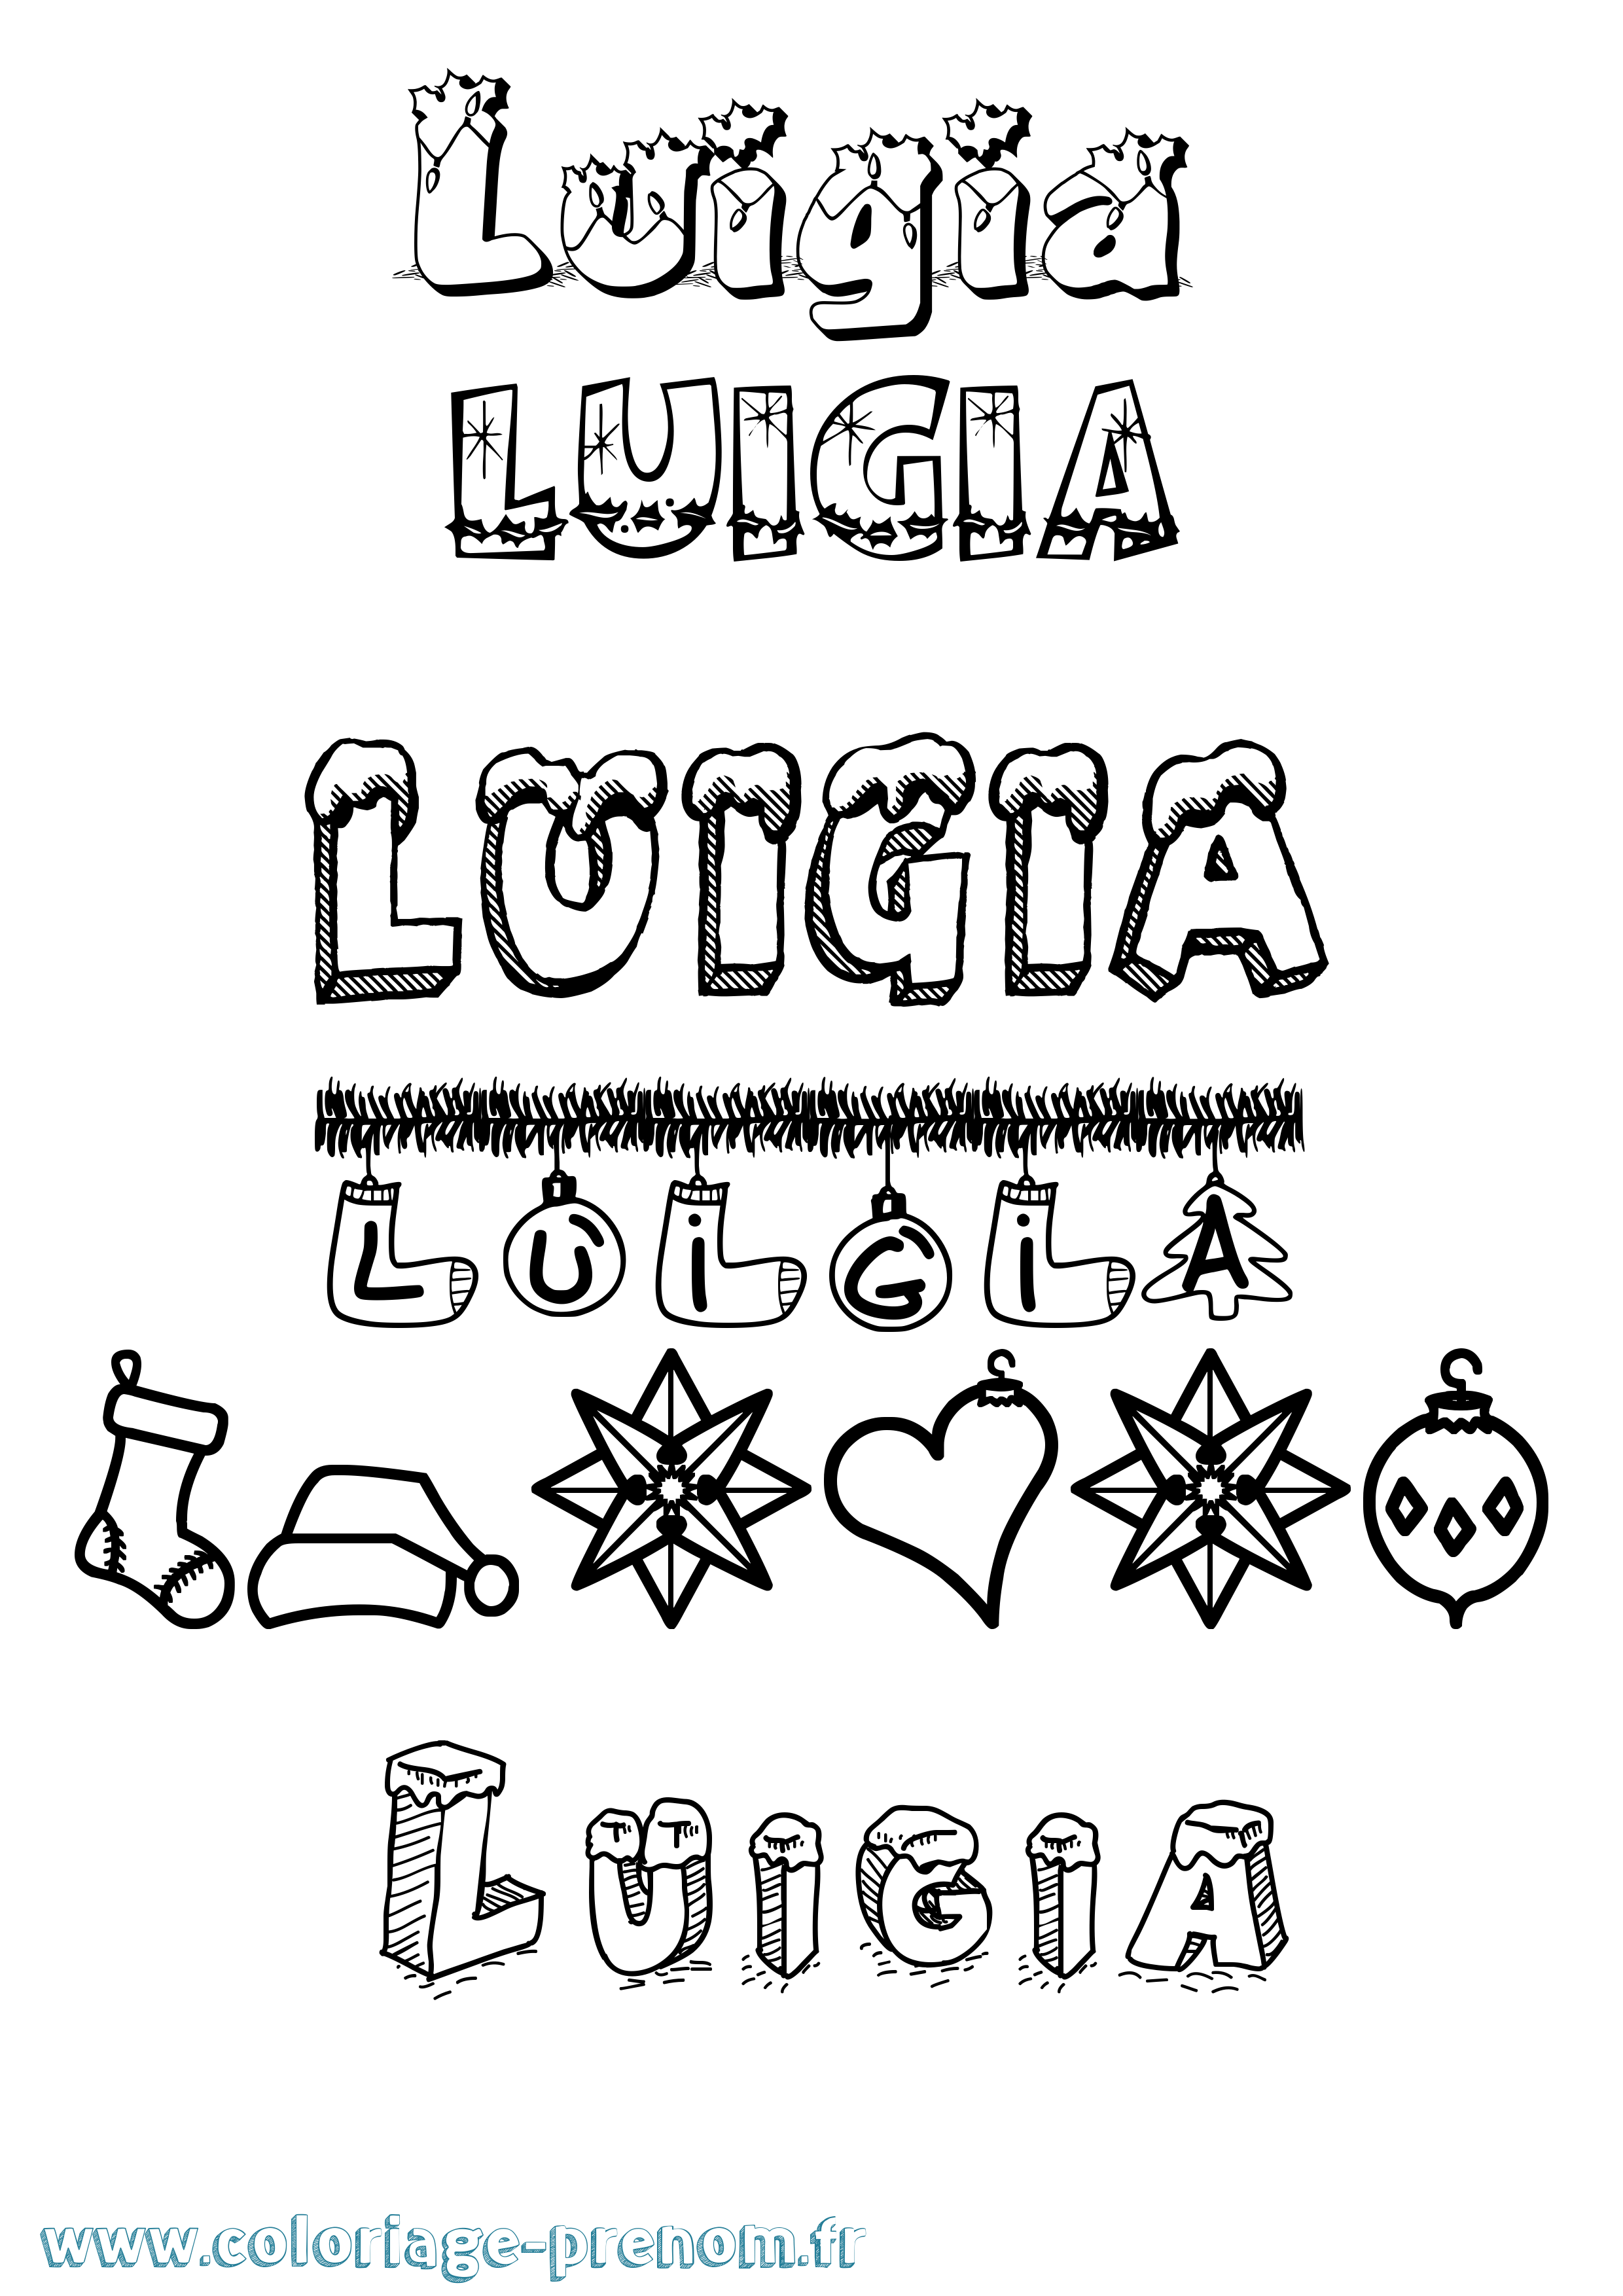 Coloriage prénom Luigia Noël